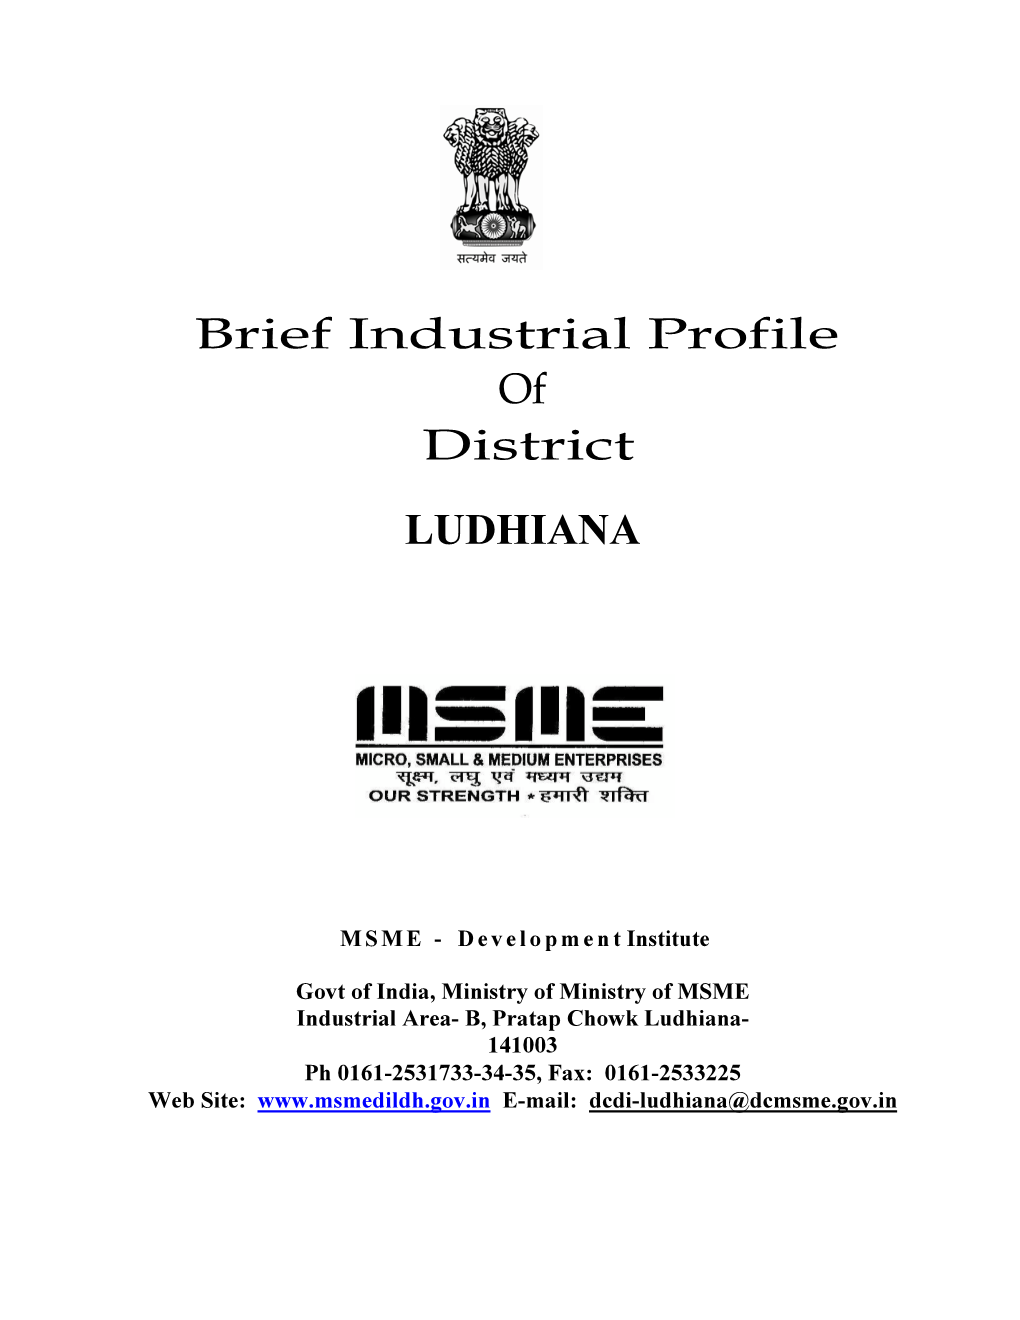 Brief Industrial Profile of District LUDHIANA